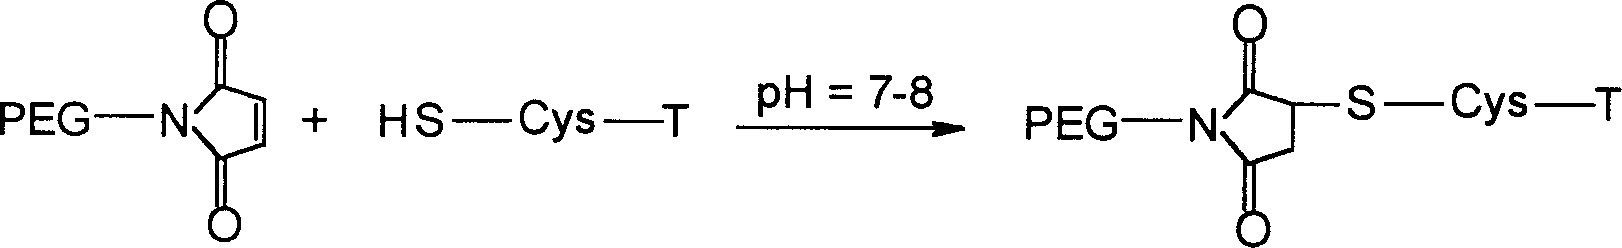 Polyethylene glycol derivatives of thymosin alphal